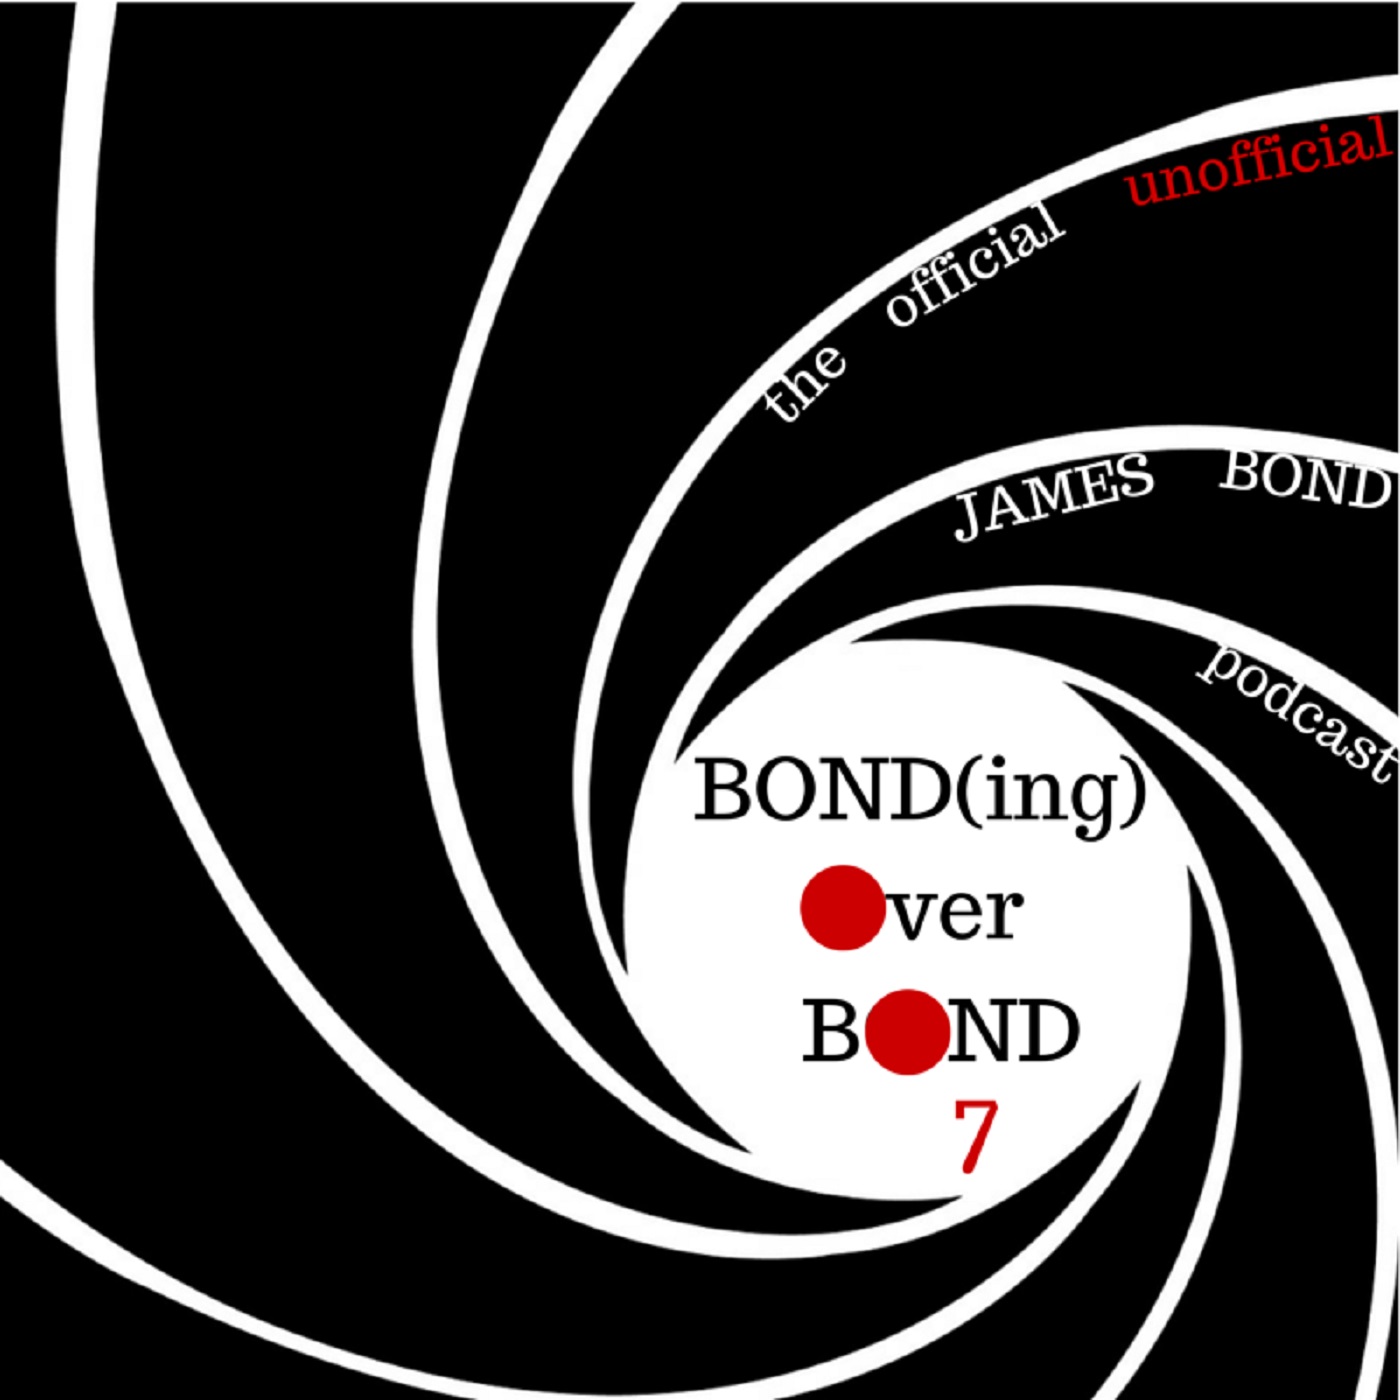 download BOND(ING) OVER BOND on iTunes: